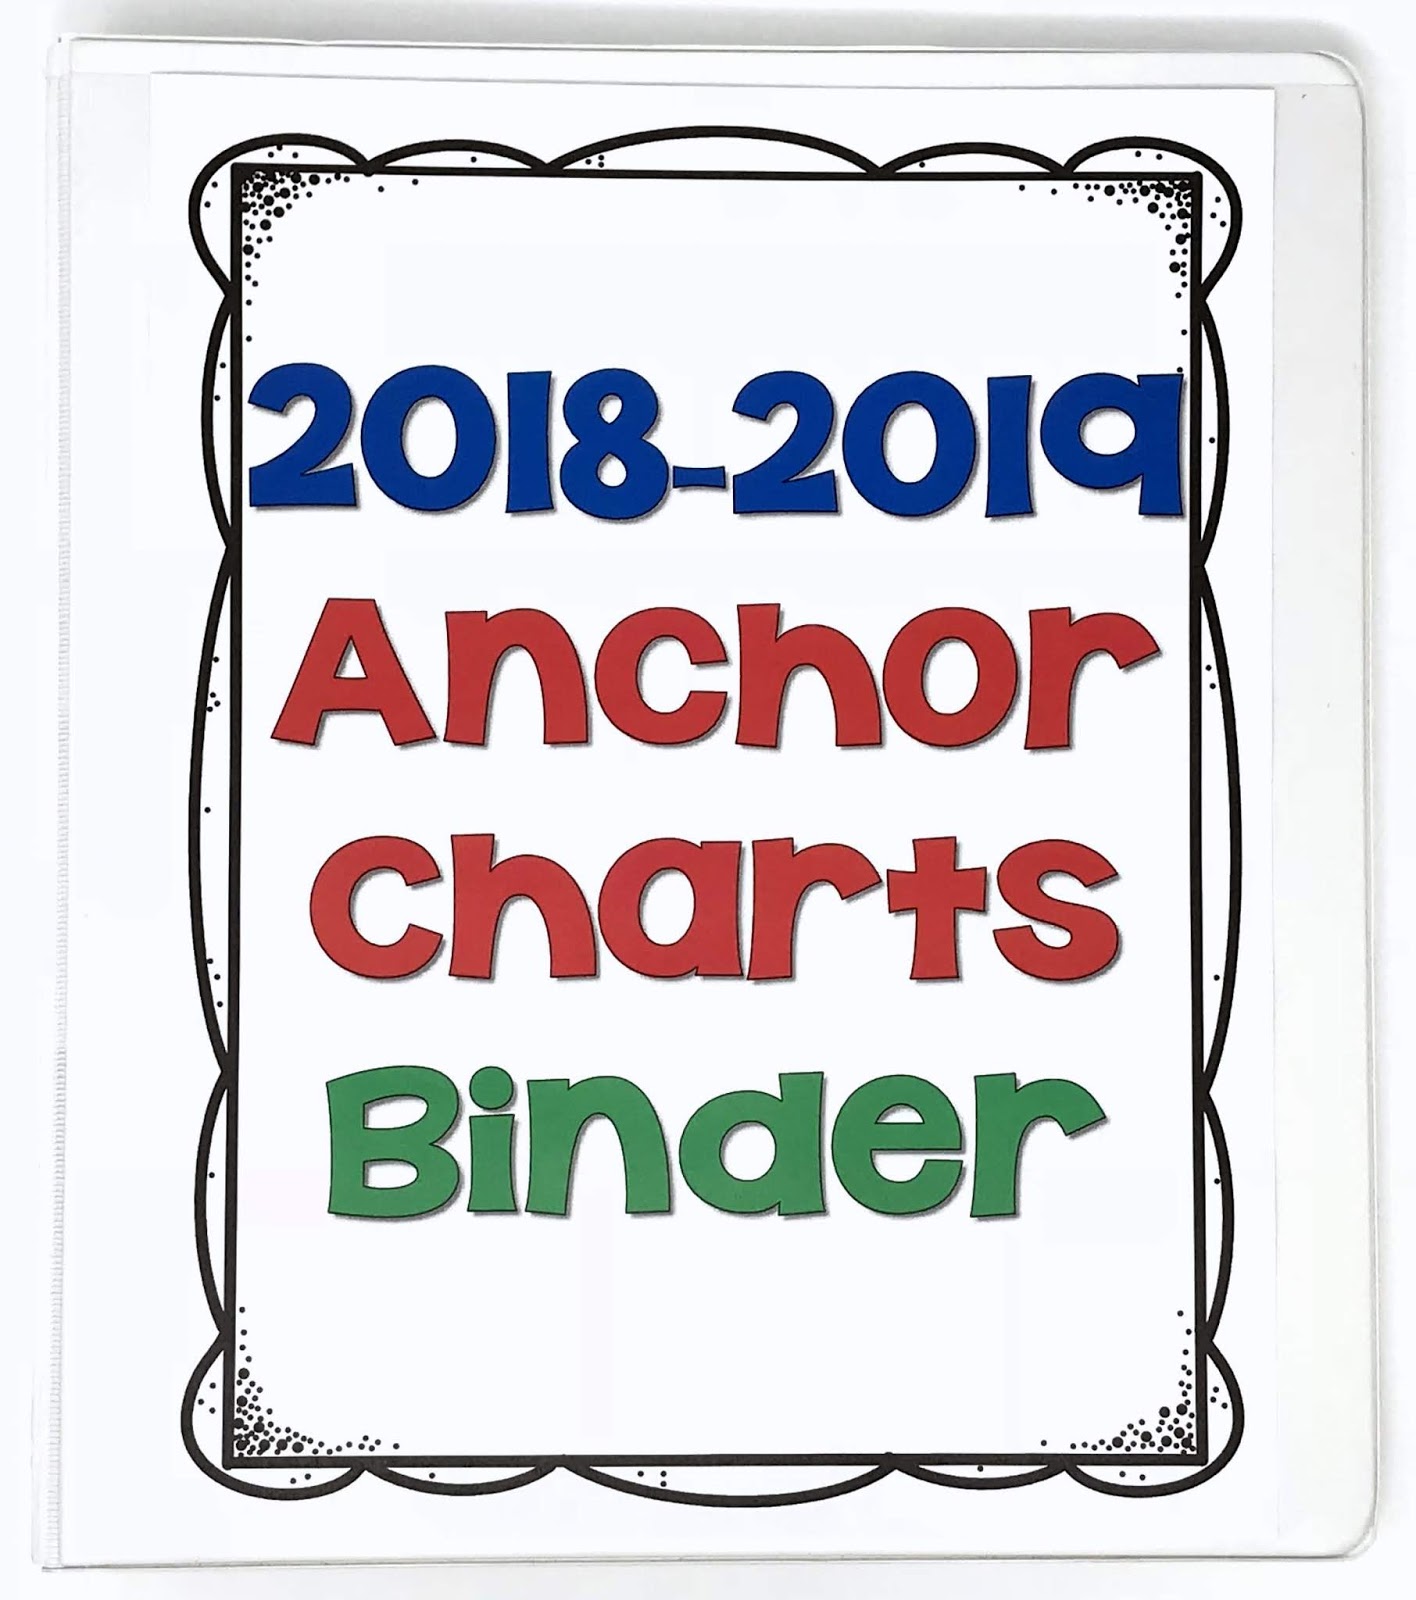 Anchor Chart Display Ideas